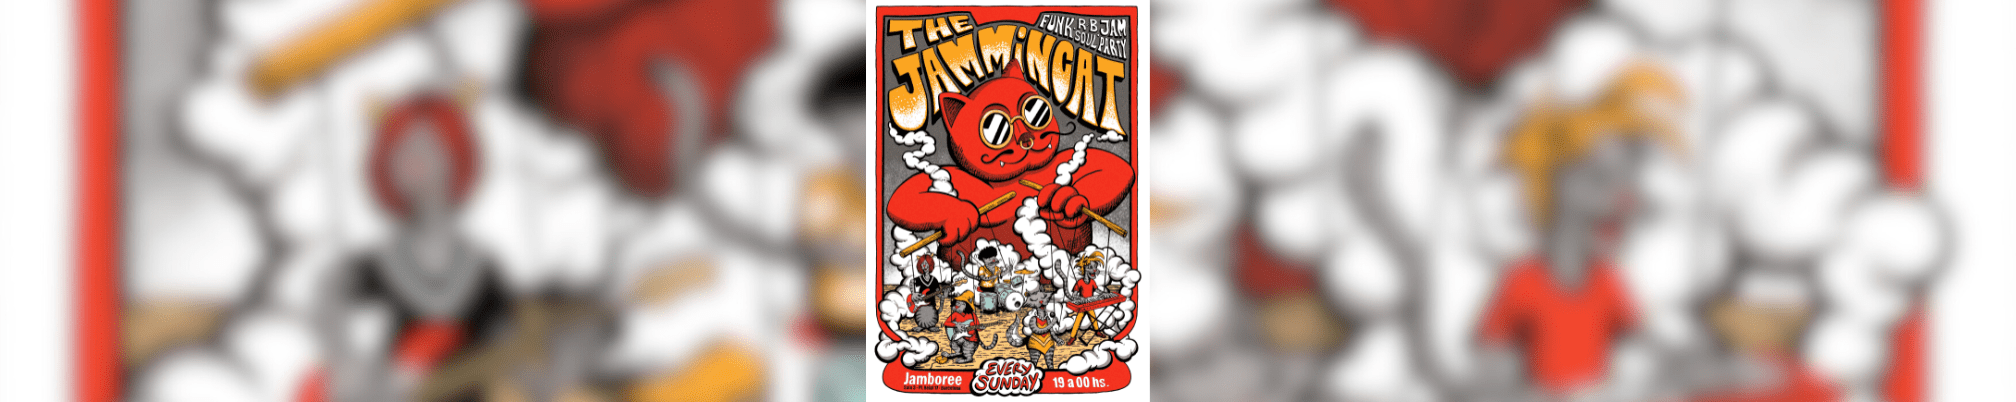 The Jammin' Cat Jamboree